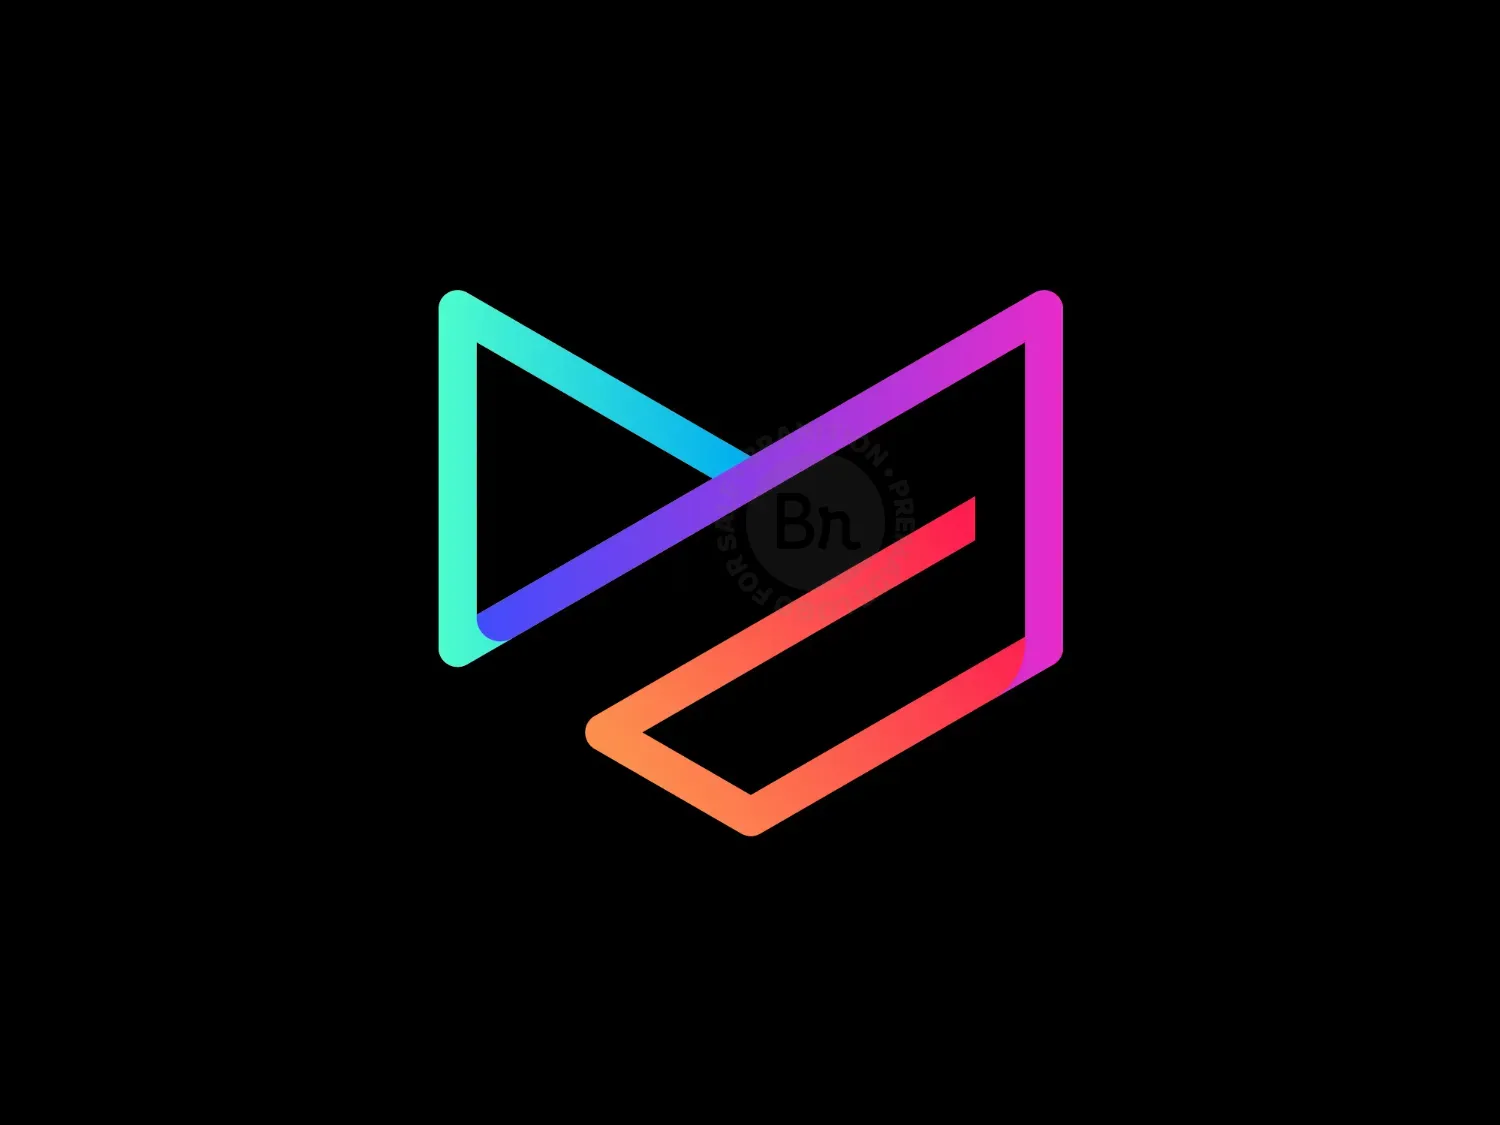 Colorful M Logo